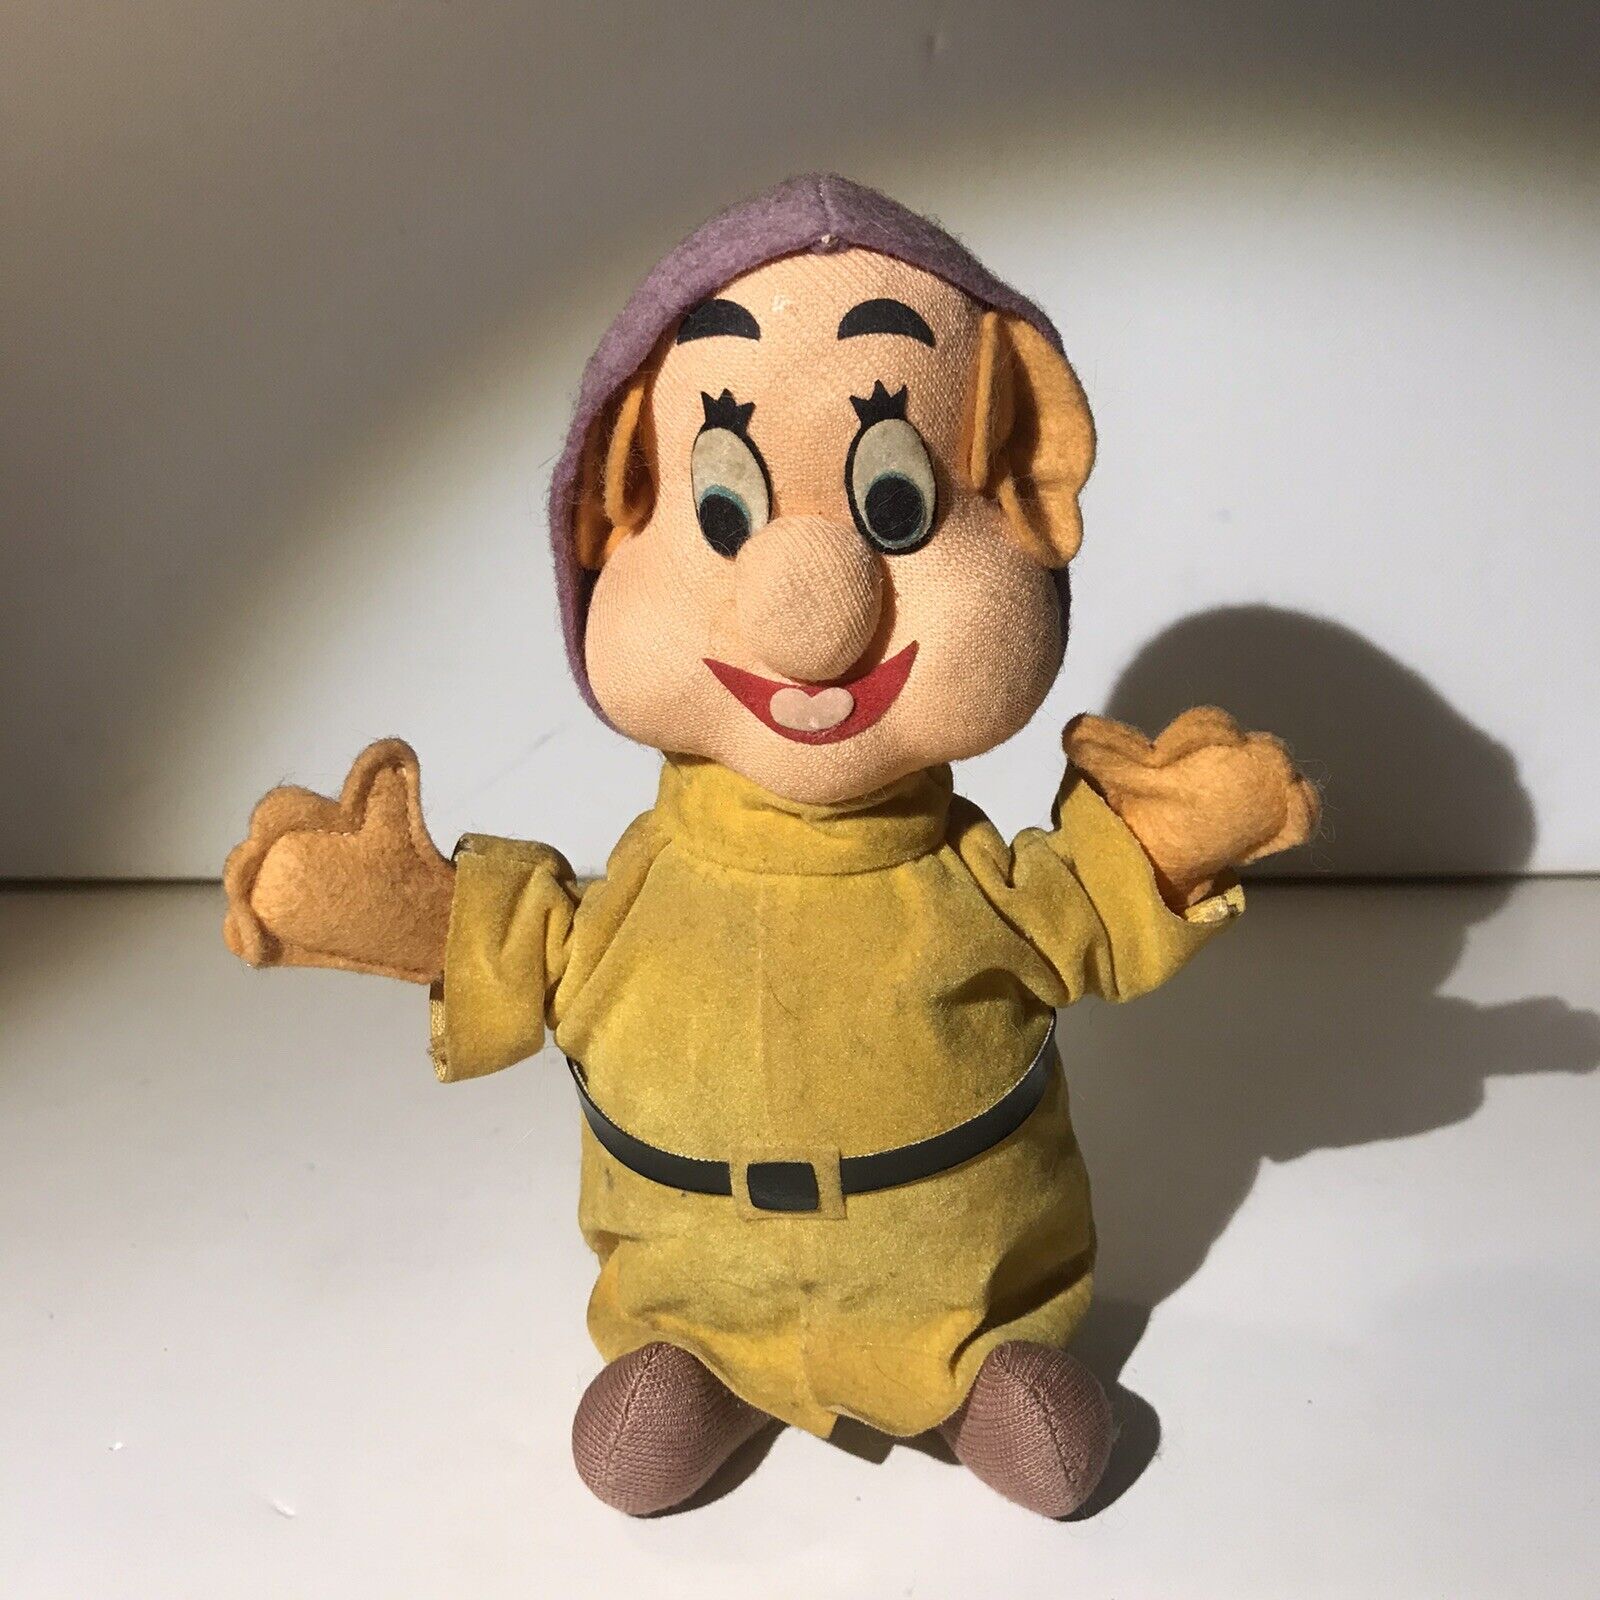 Vintage Walt Disney 1939-41? Snow White Dwarf Dopey Saw Dust Filled “Plush” Toy